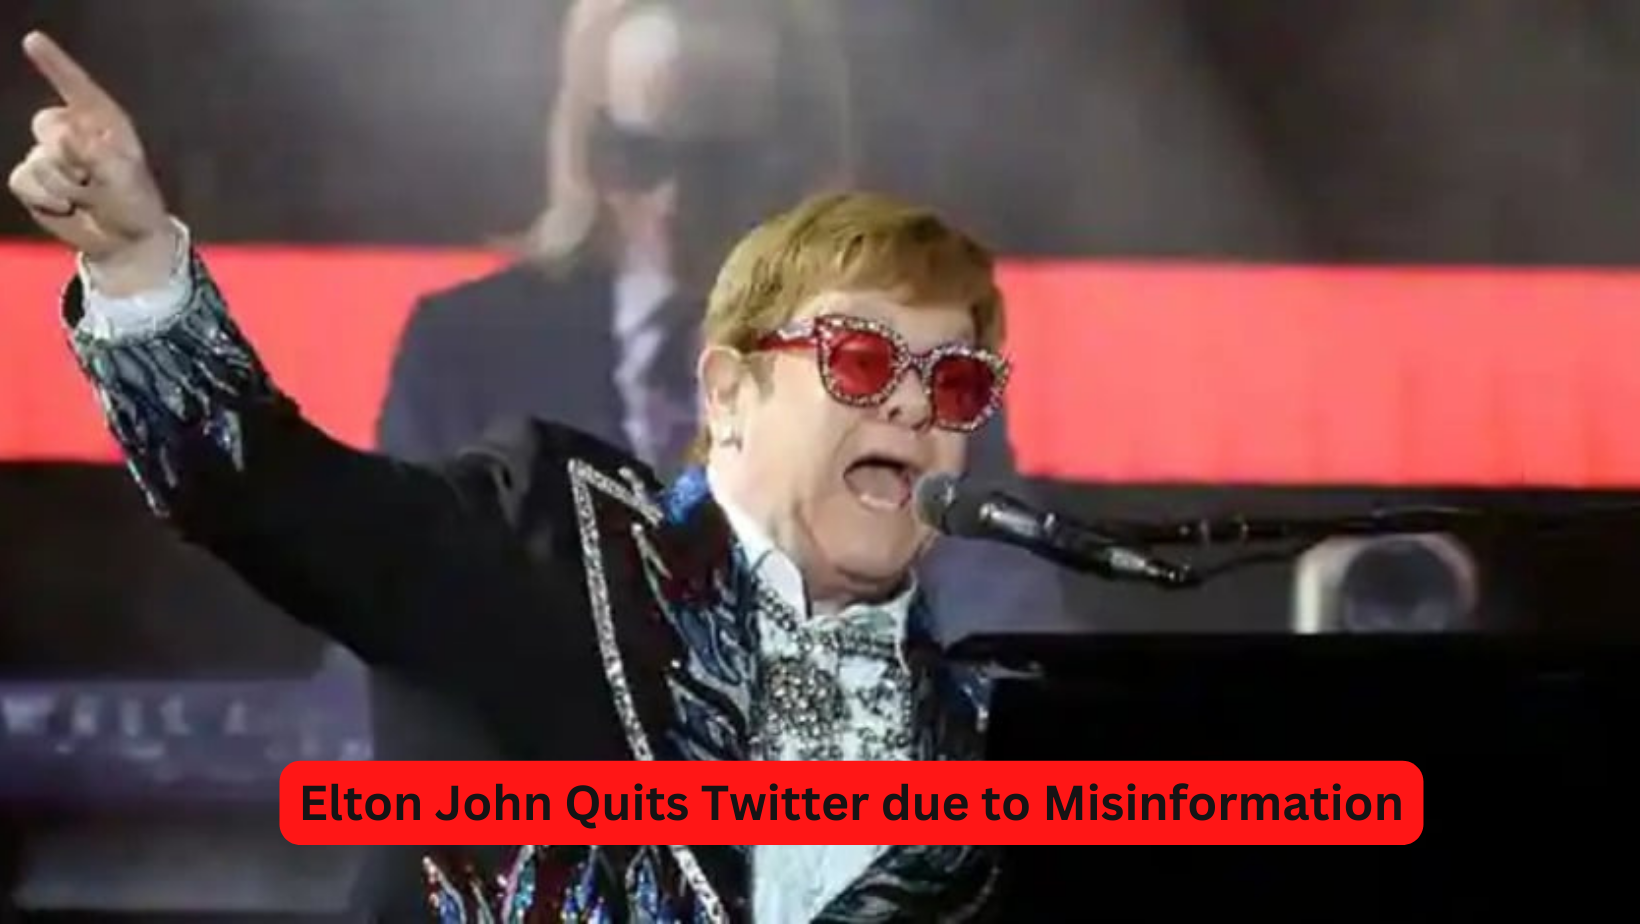 The Famous Musician Elton John Quits Twitter